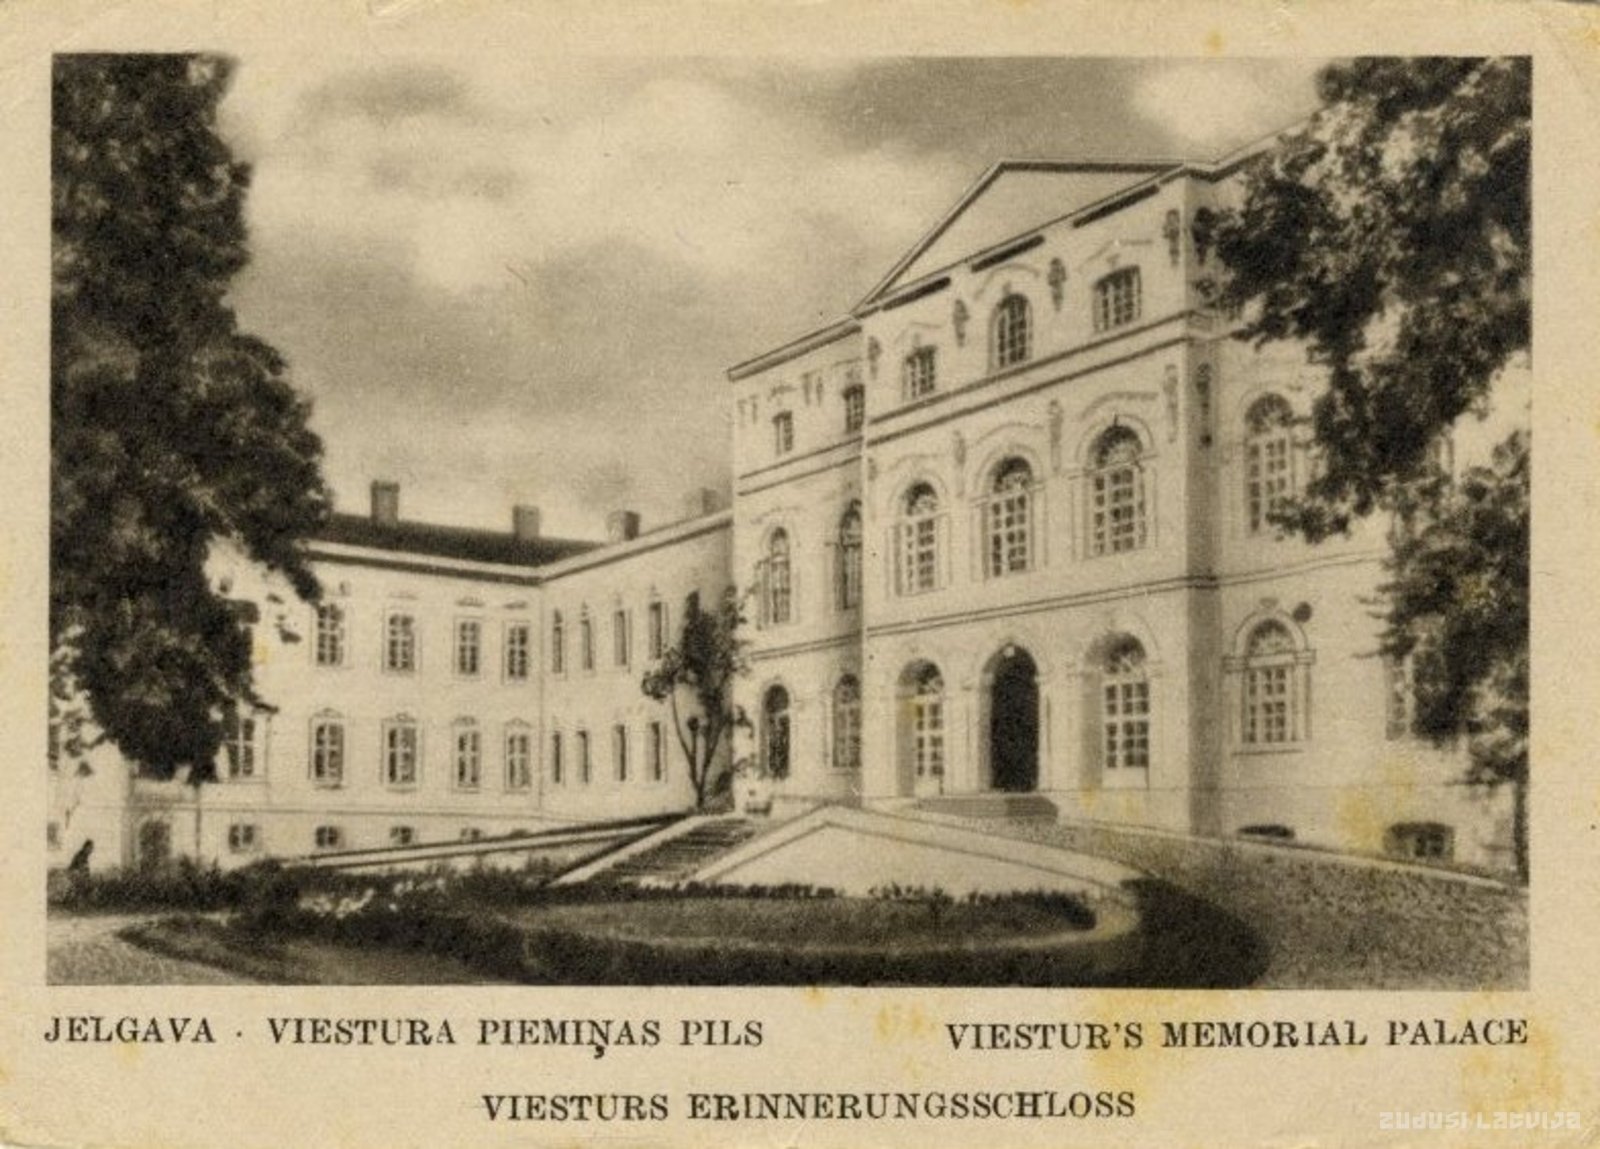 Viestur's memorial palace, Jelgava Castle, Viestor Memorial Castle, Jelgava - Viestor Memorial Palace